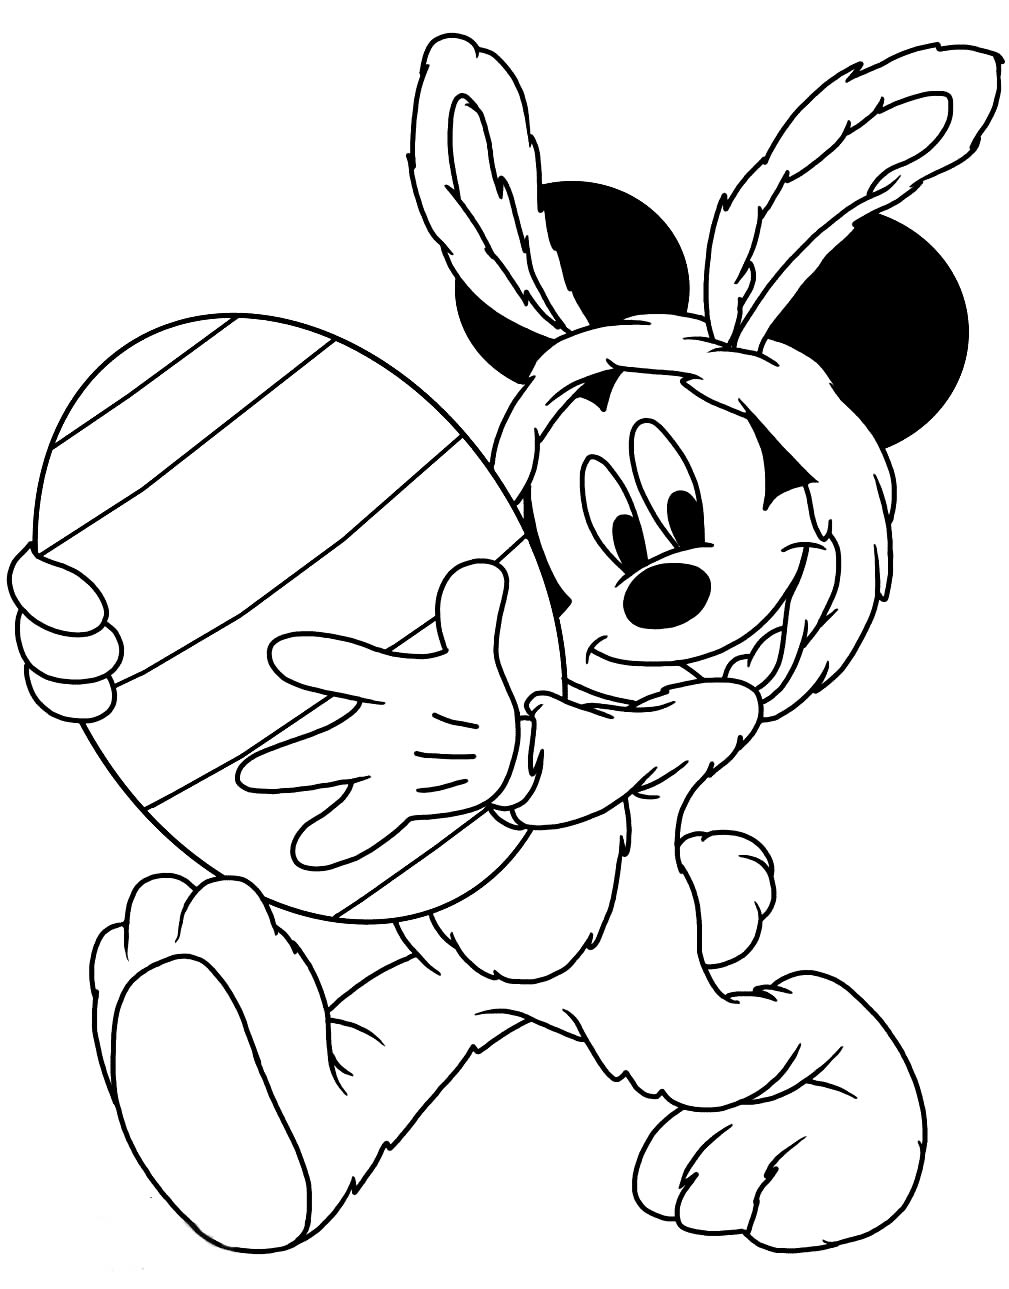 Desenho para colorir do Mickey